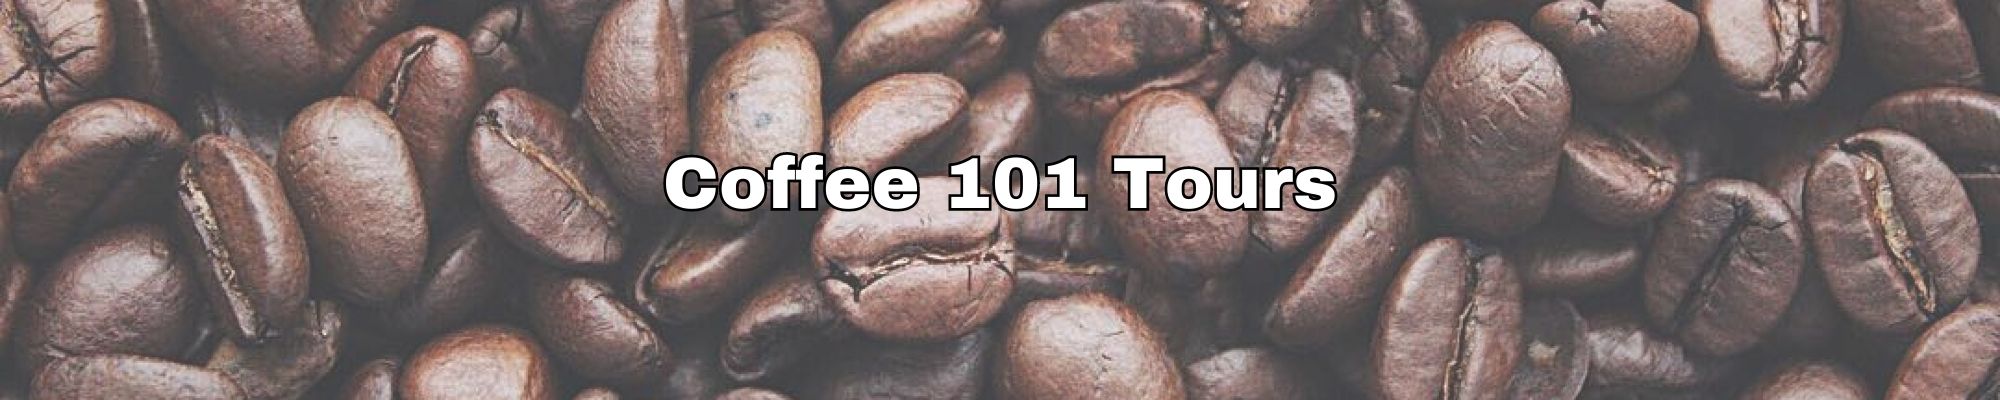 coffee-101-tours-main-1-.jpg